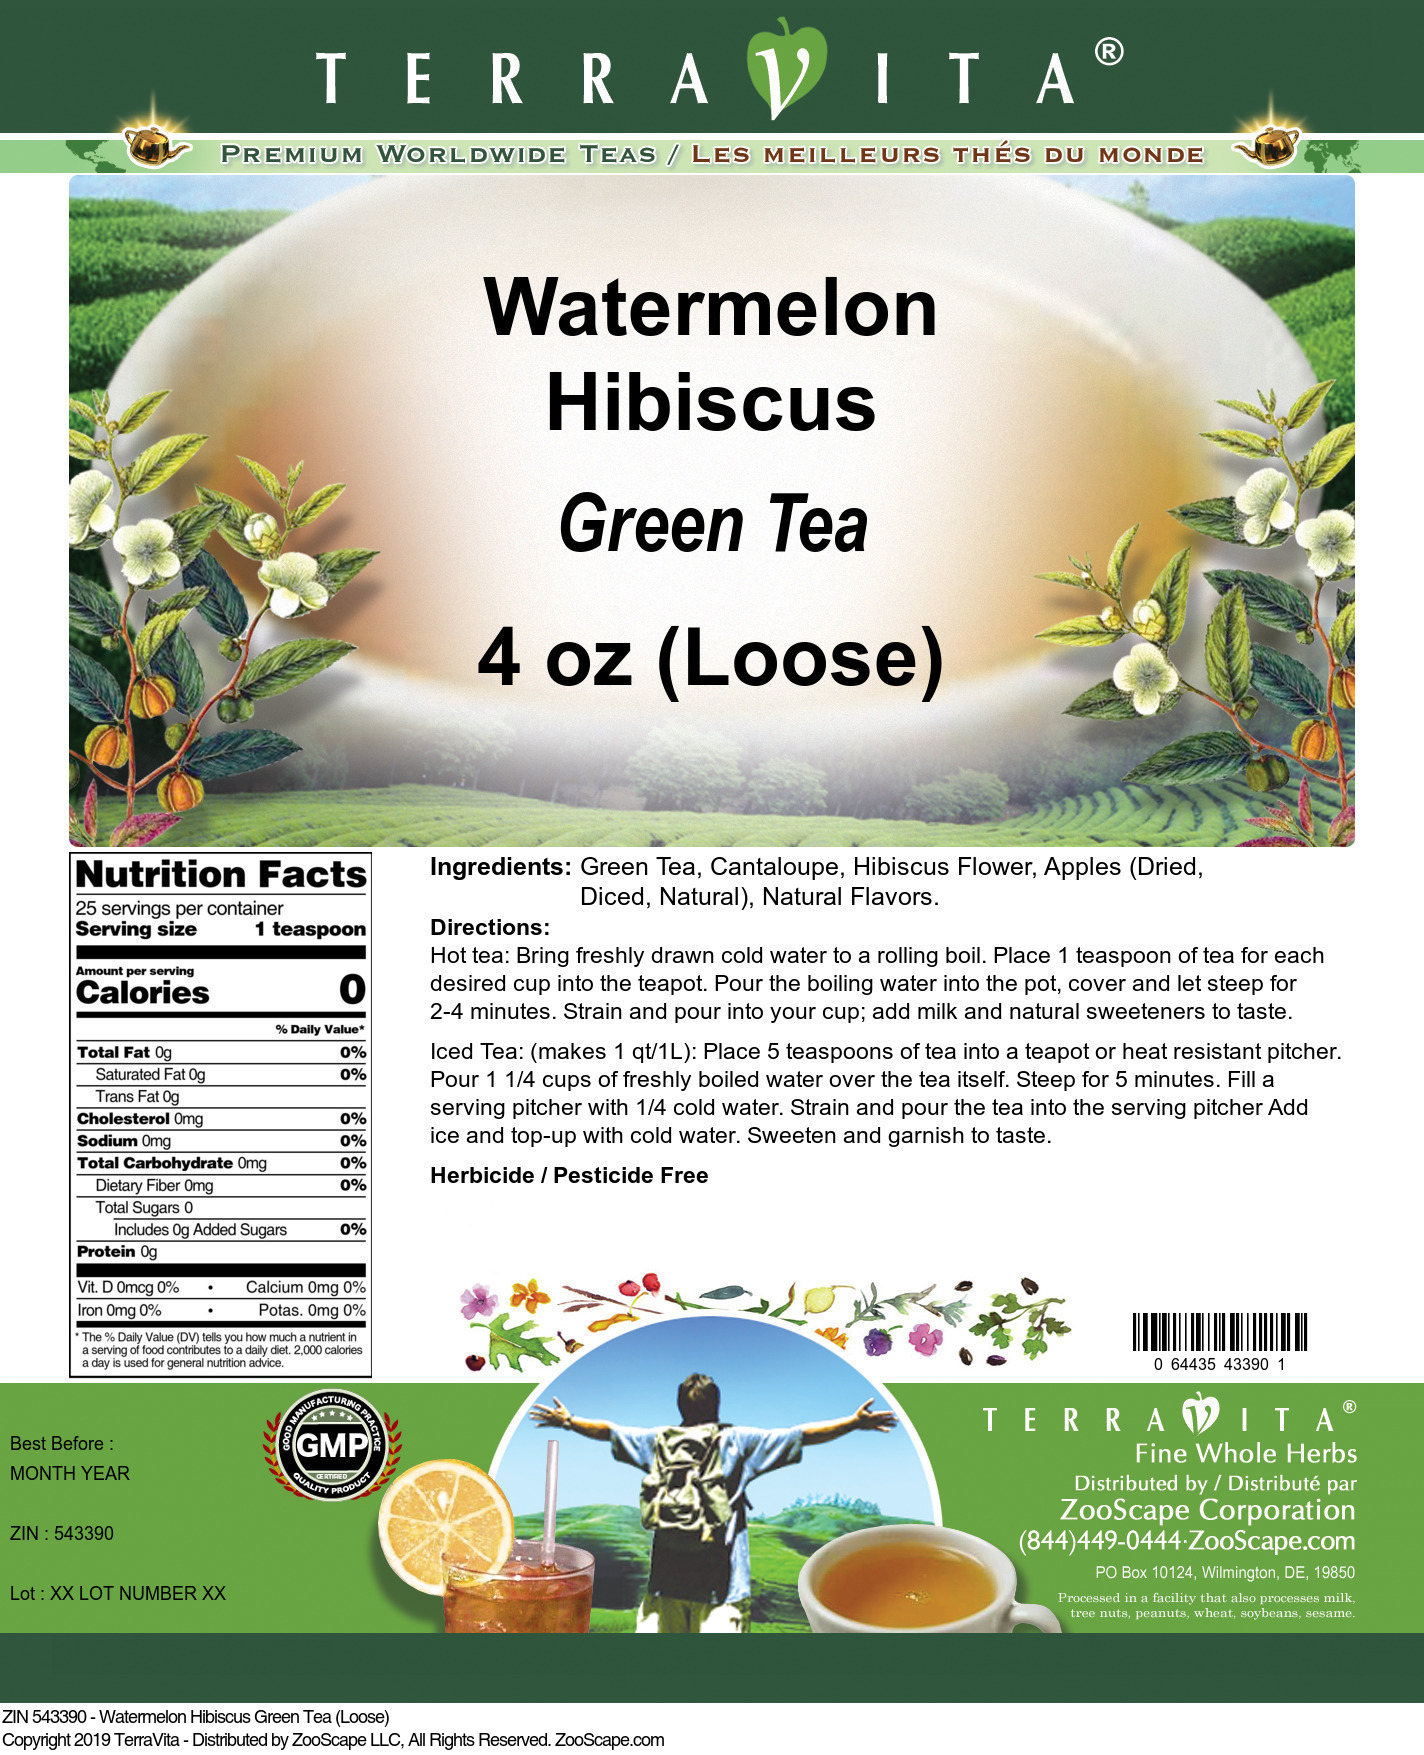 Watermelon Hibiscus Green Tea (Loose) - Label